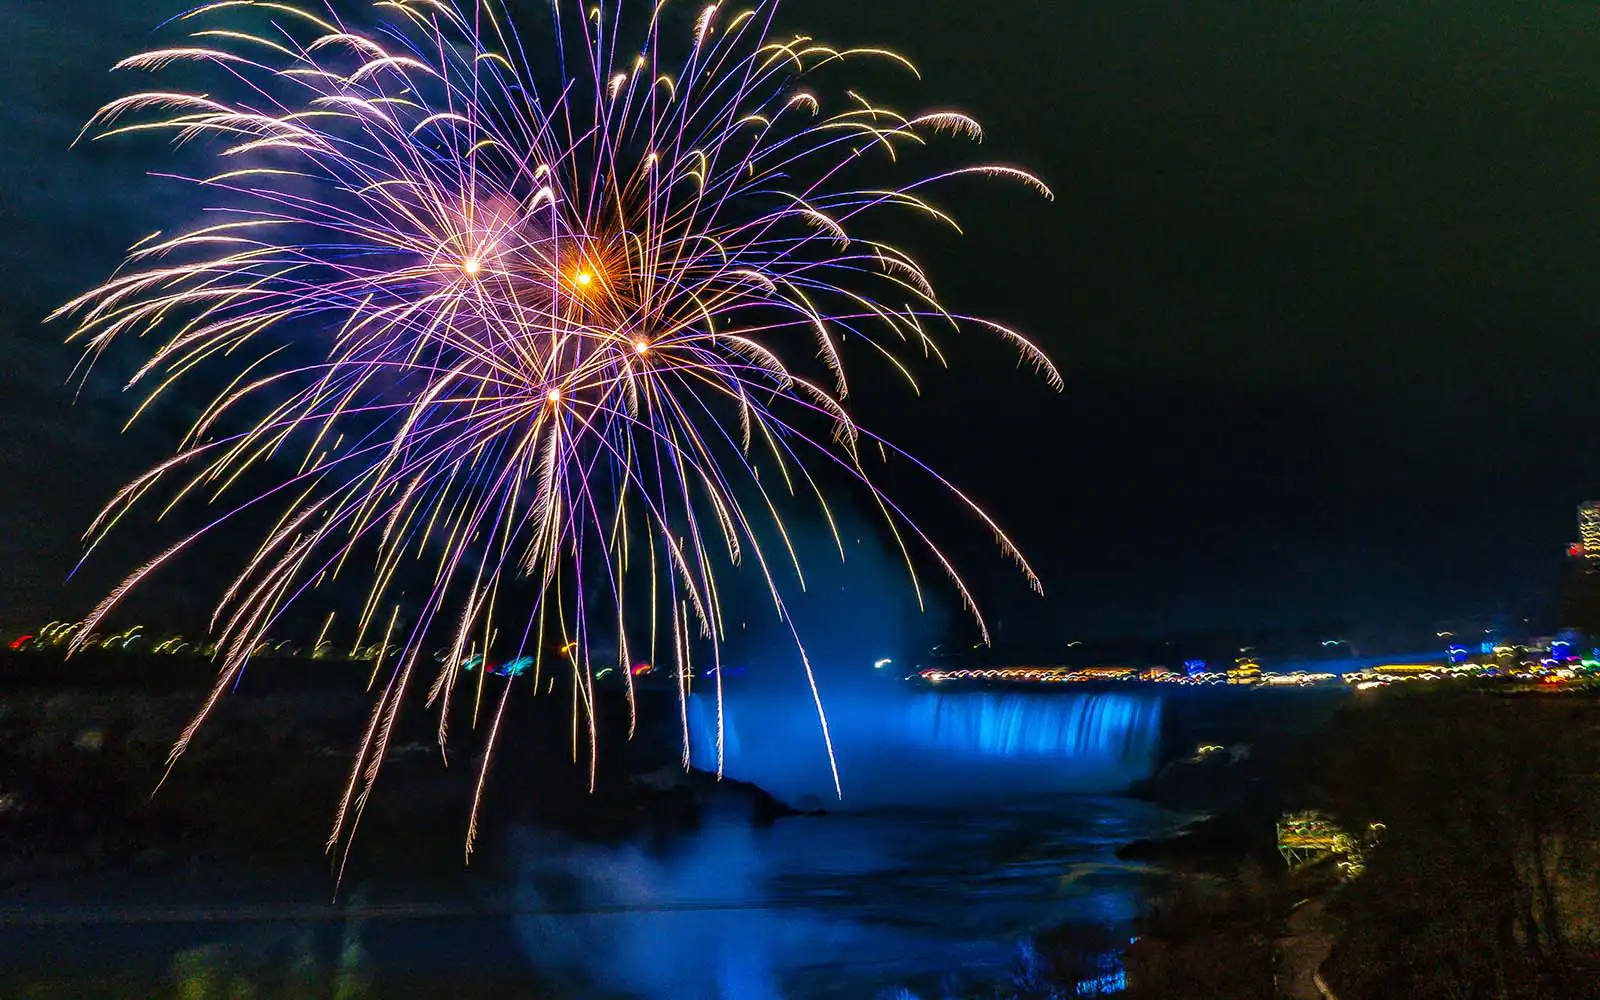 White, blue and purple fireworks bursting infront of the Canadian Horseshoe Falls illuminated in blue 